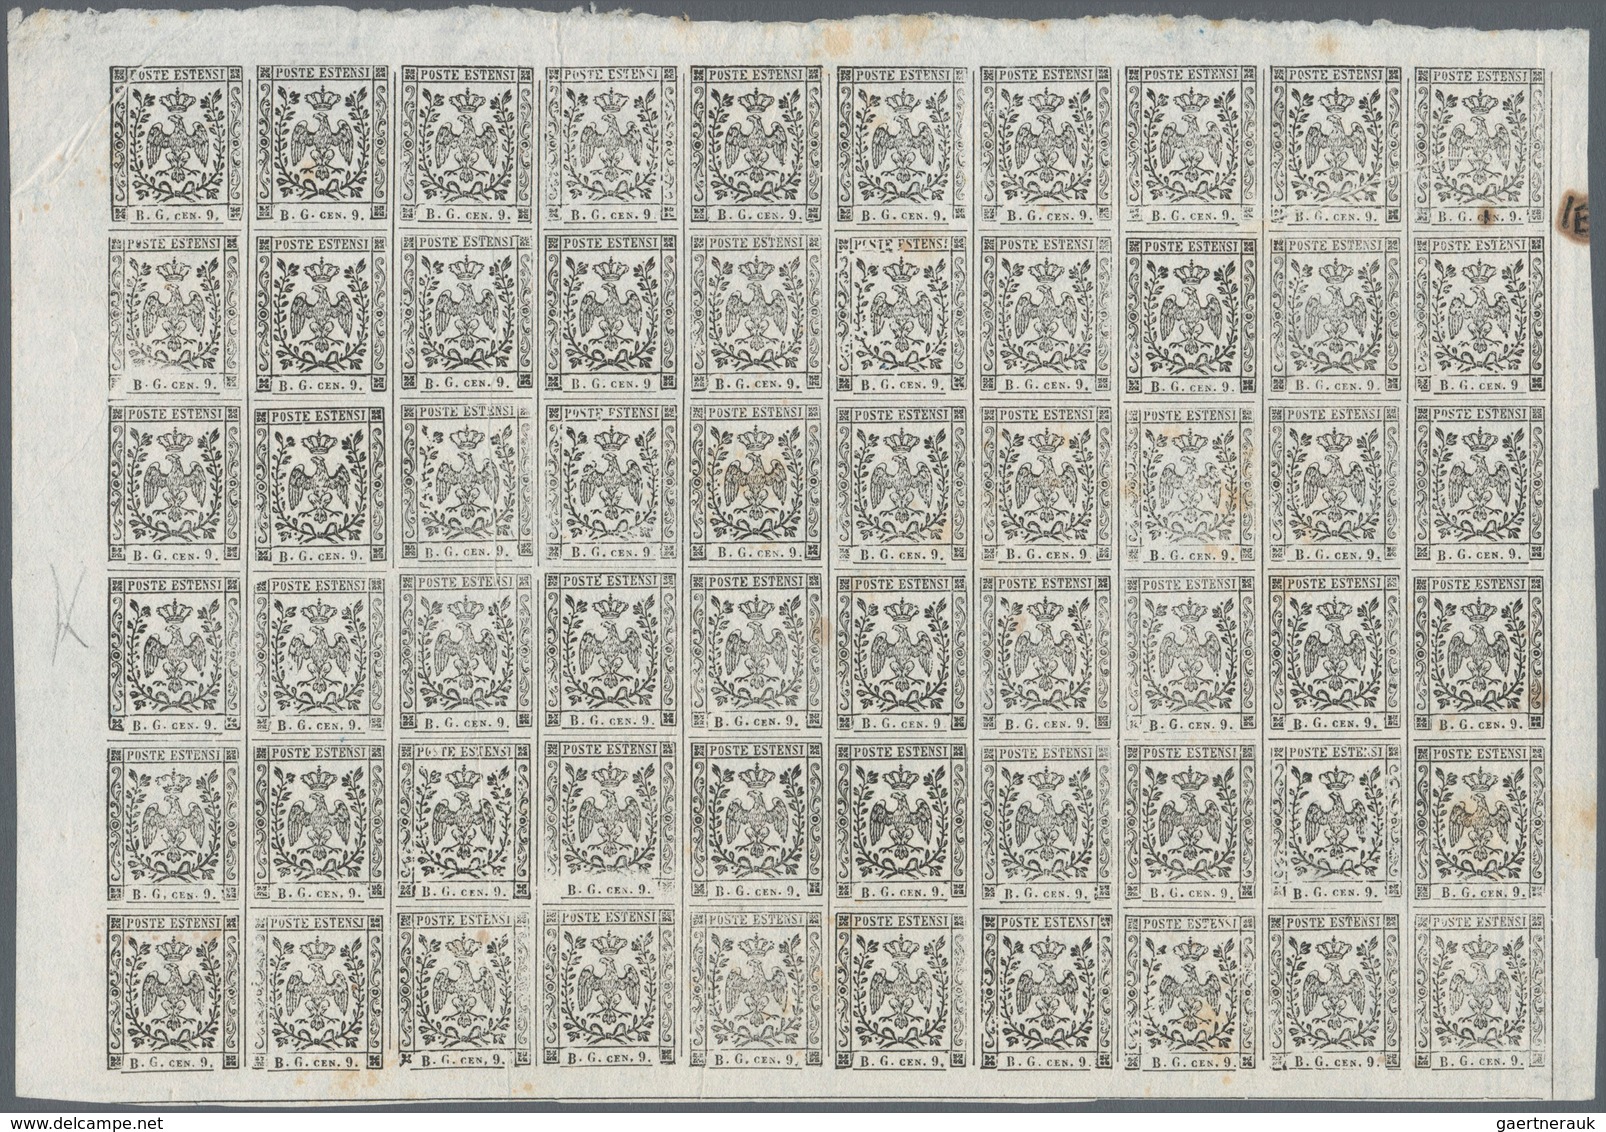 00741 Italien - Altitalienische Staaten: Modena - Zeitungsstempelmarken: 1852: Proofs Of Postage Dues Stam - Modena